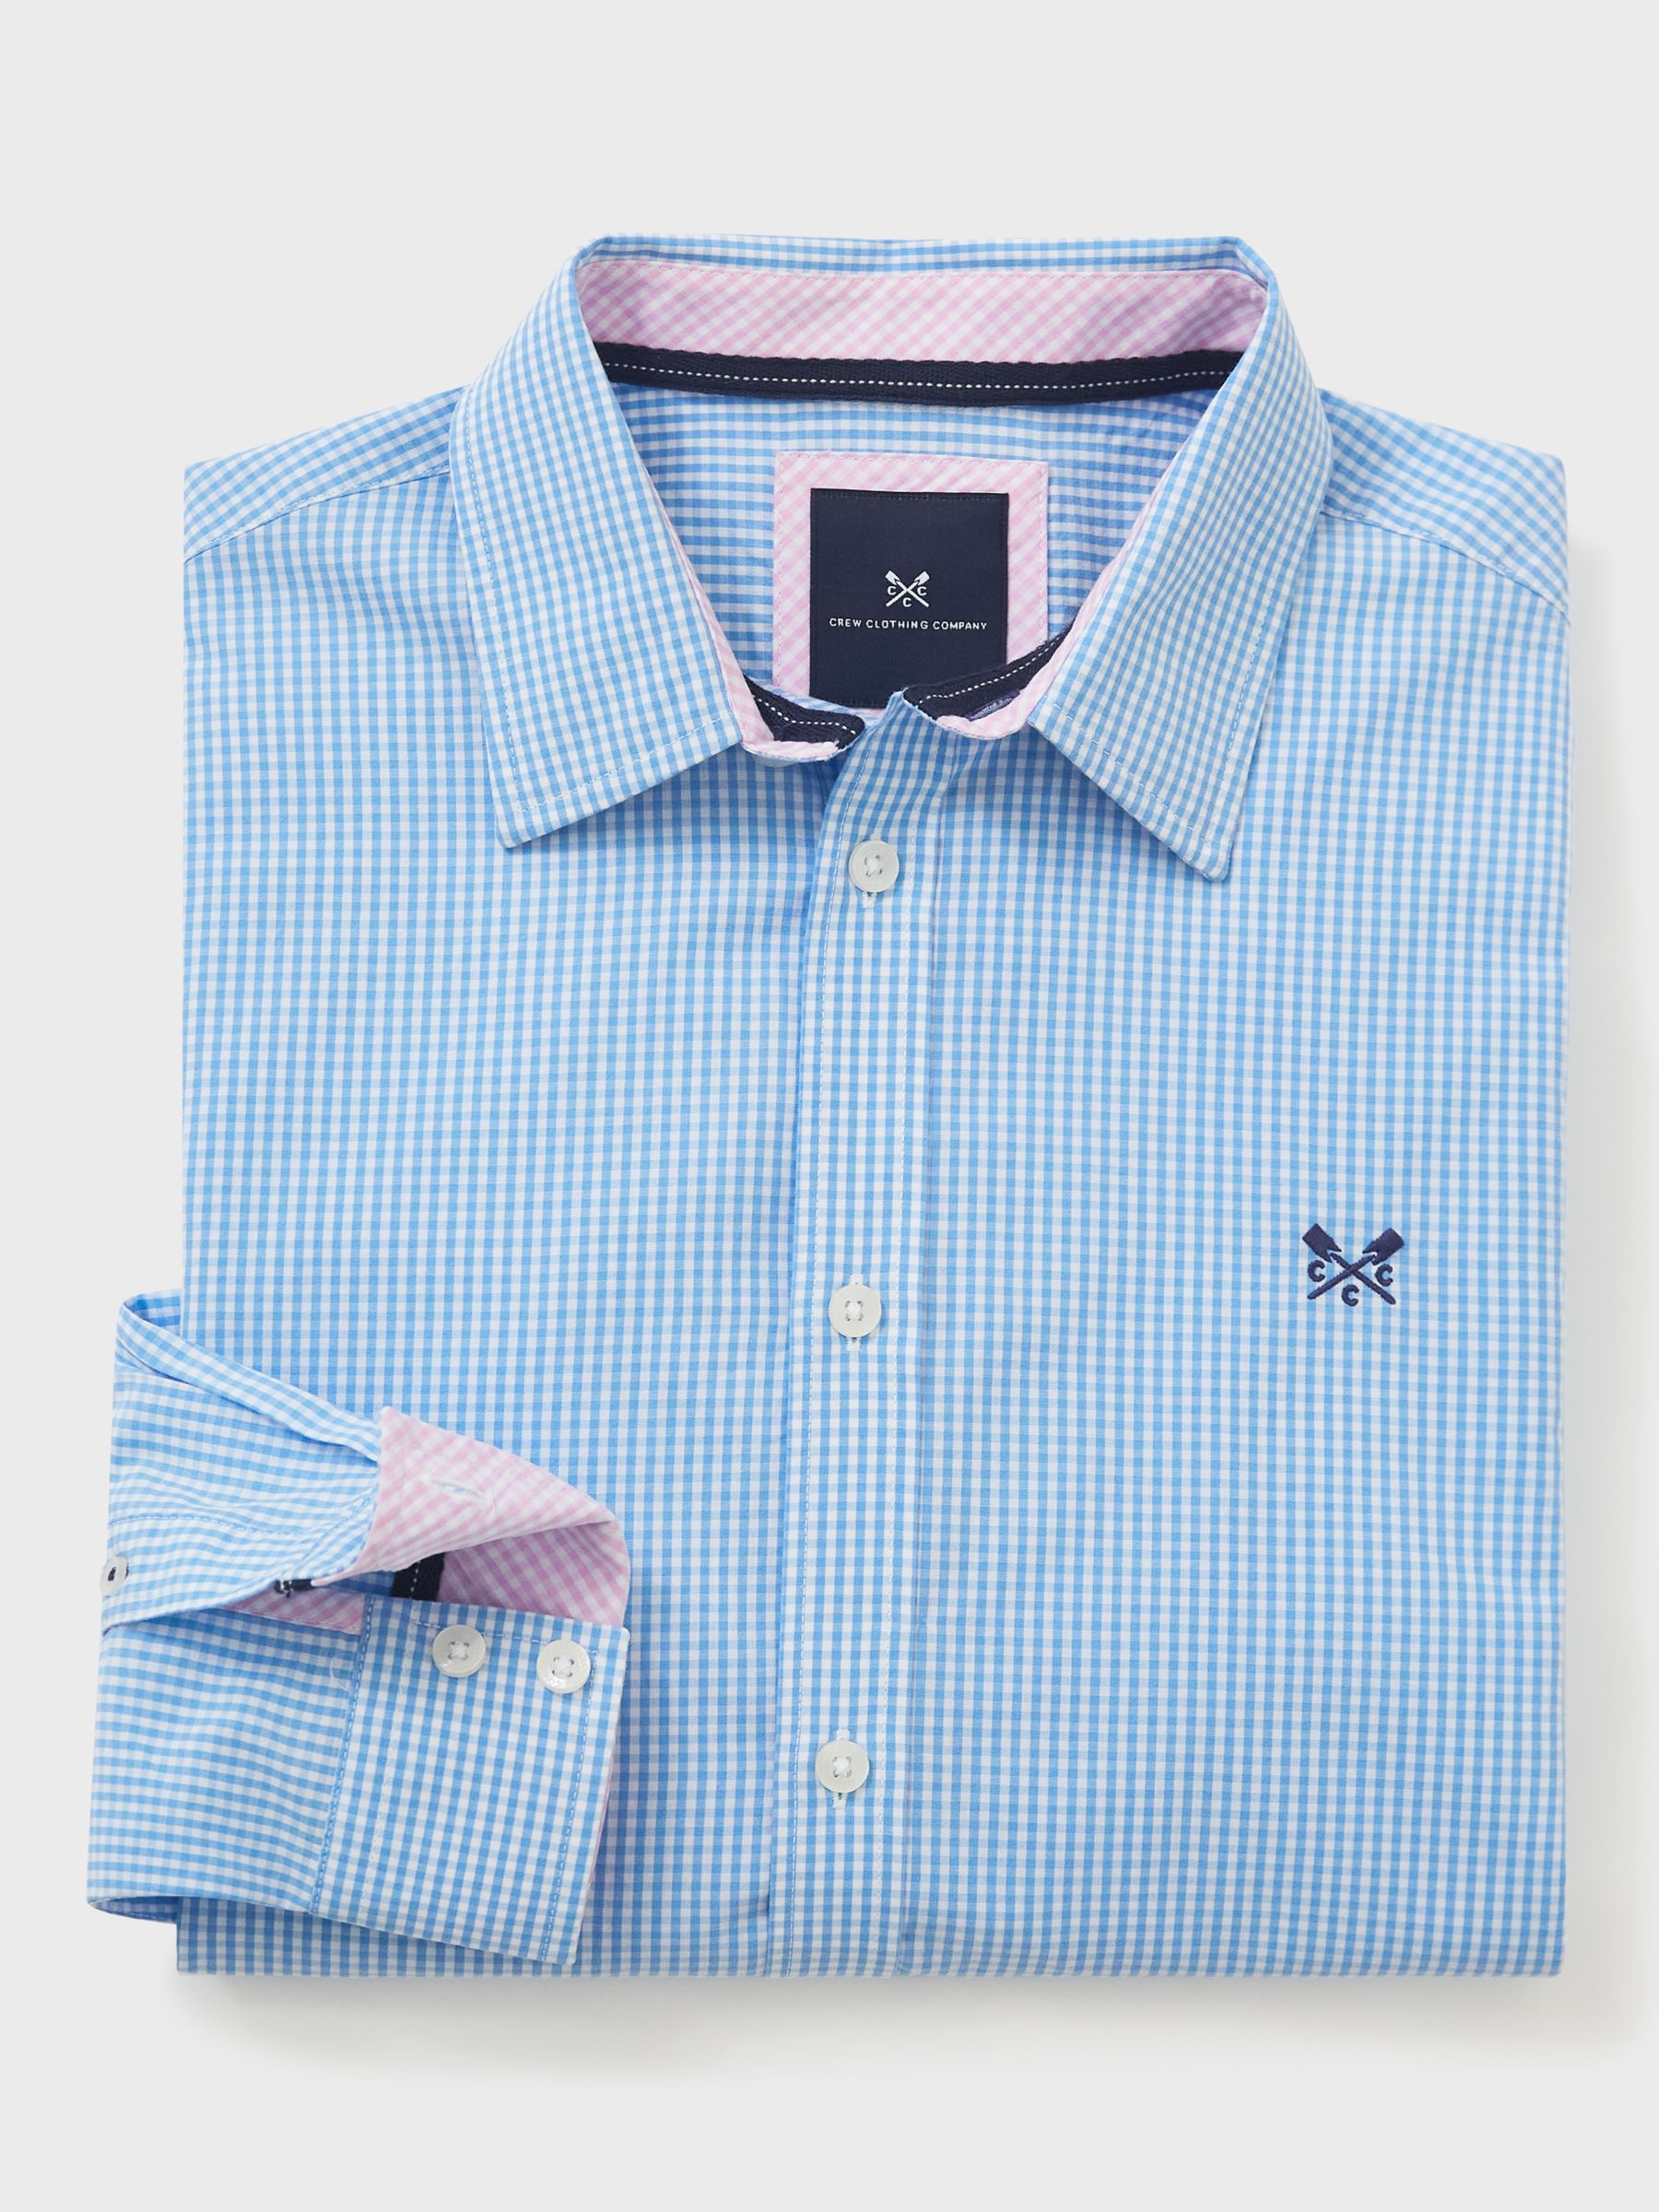 Crew Clothing Classic Micro Gingham Check Shirt, Sky Blue, XS